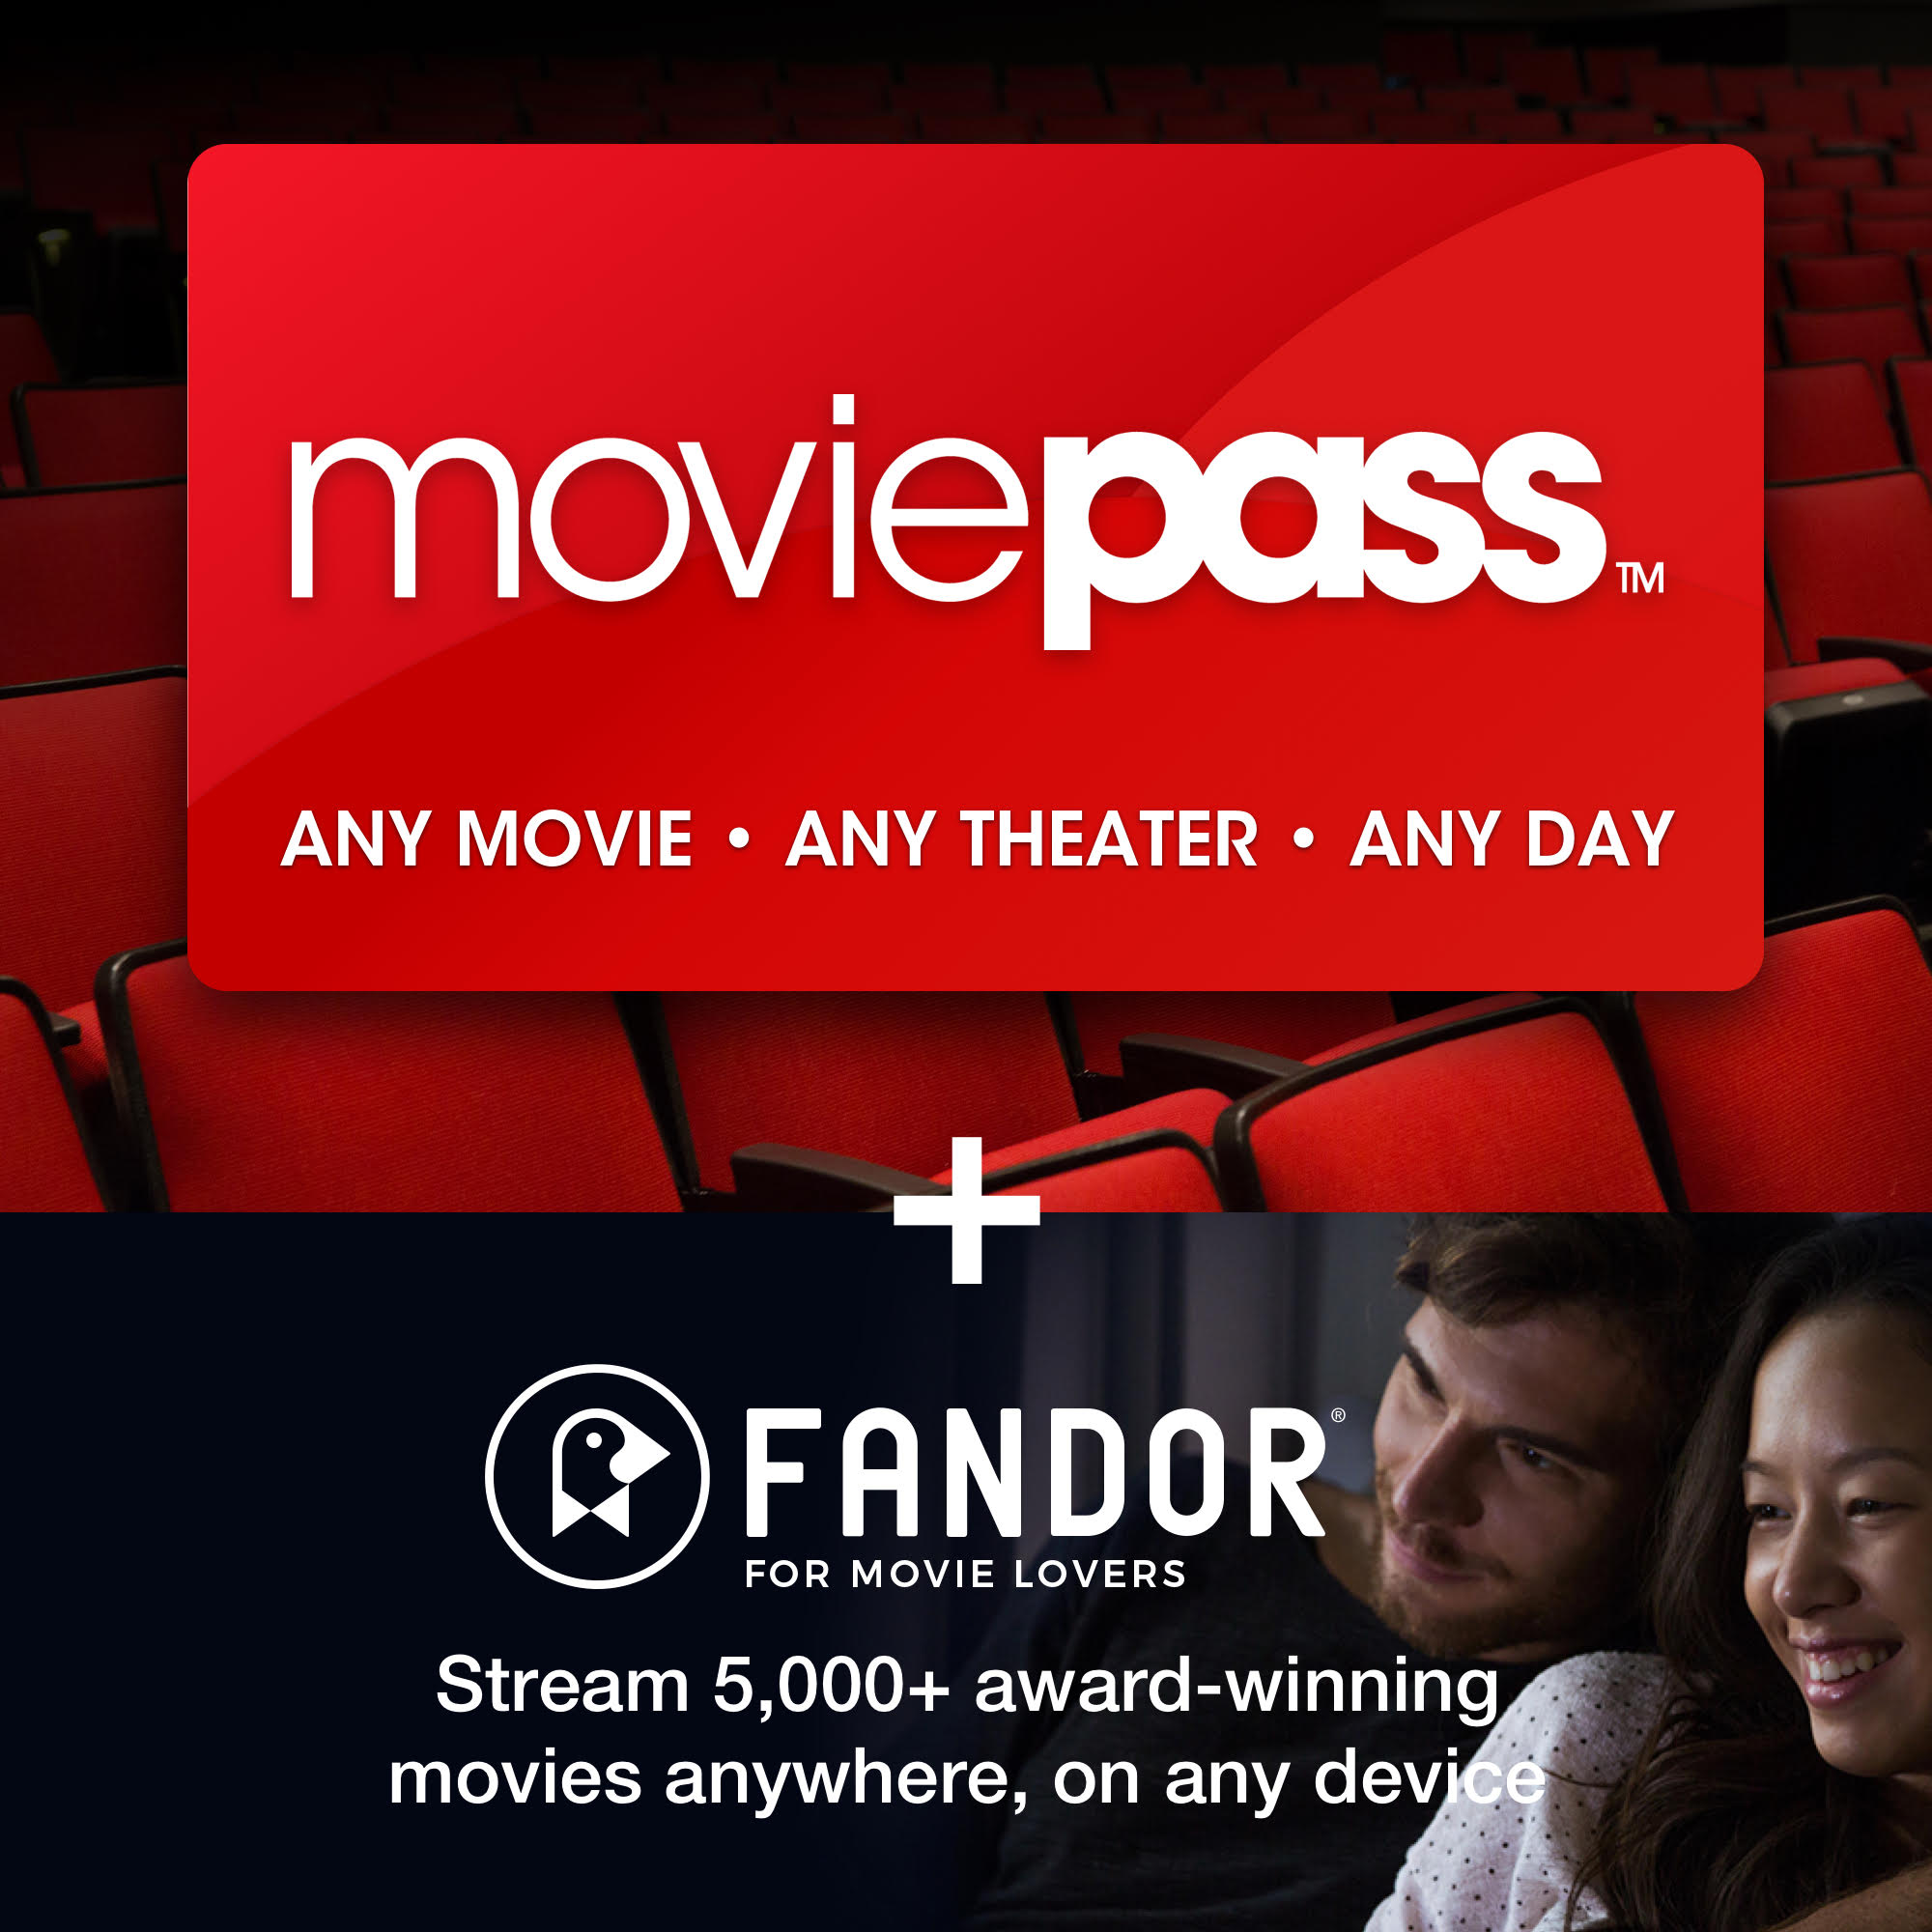 Costco MoviePass-Fandor Deal